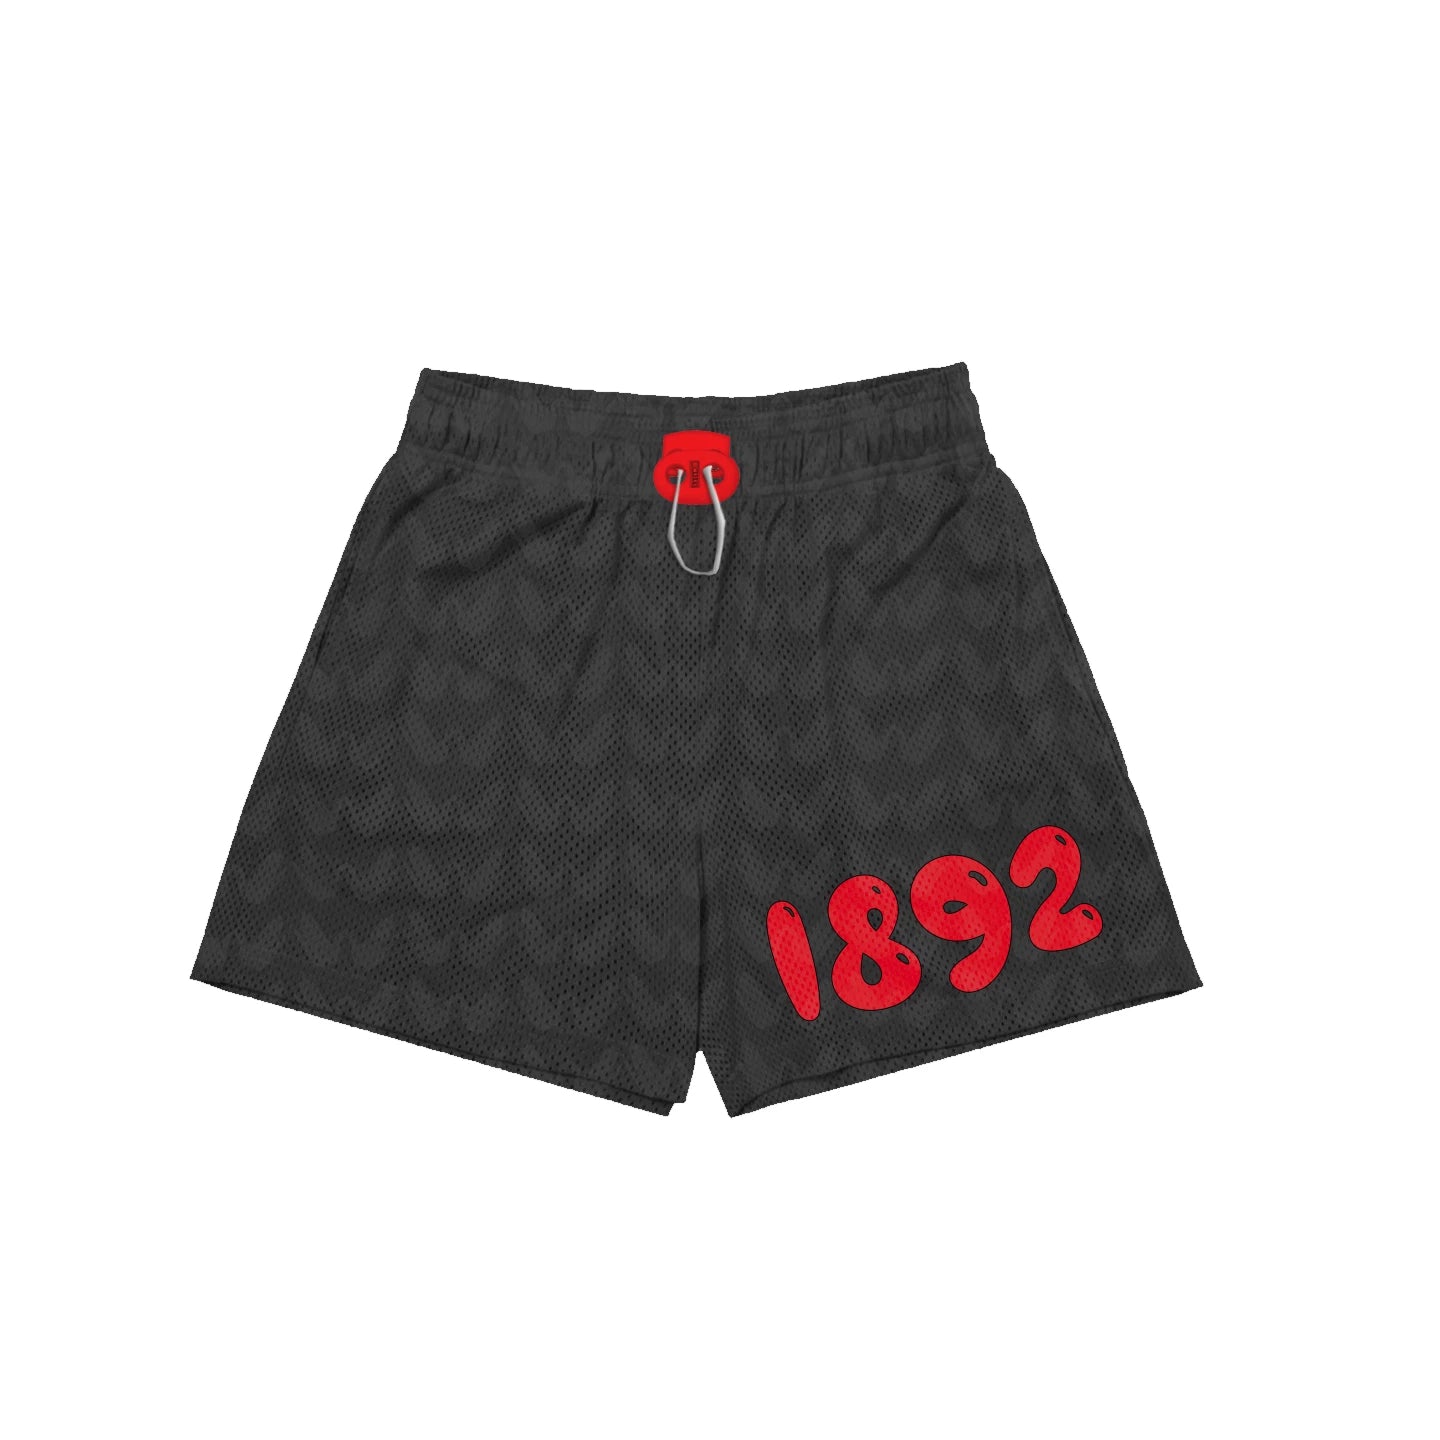 1892 Mesh Shorts - Winston-Salem State University